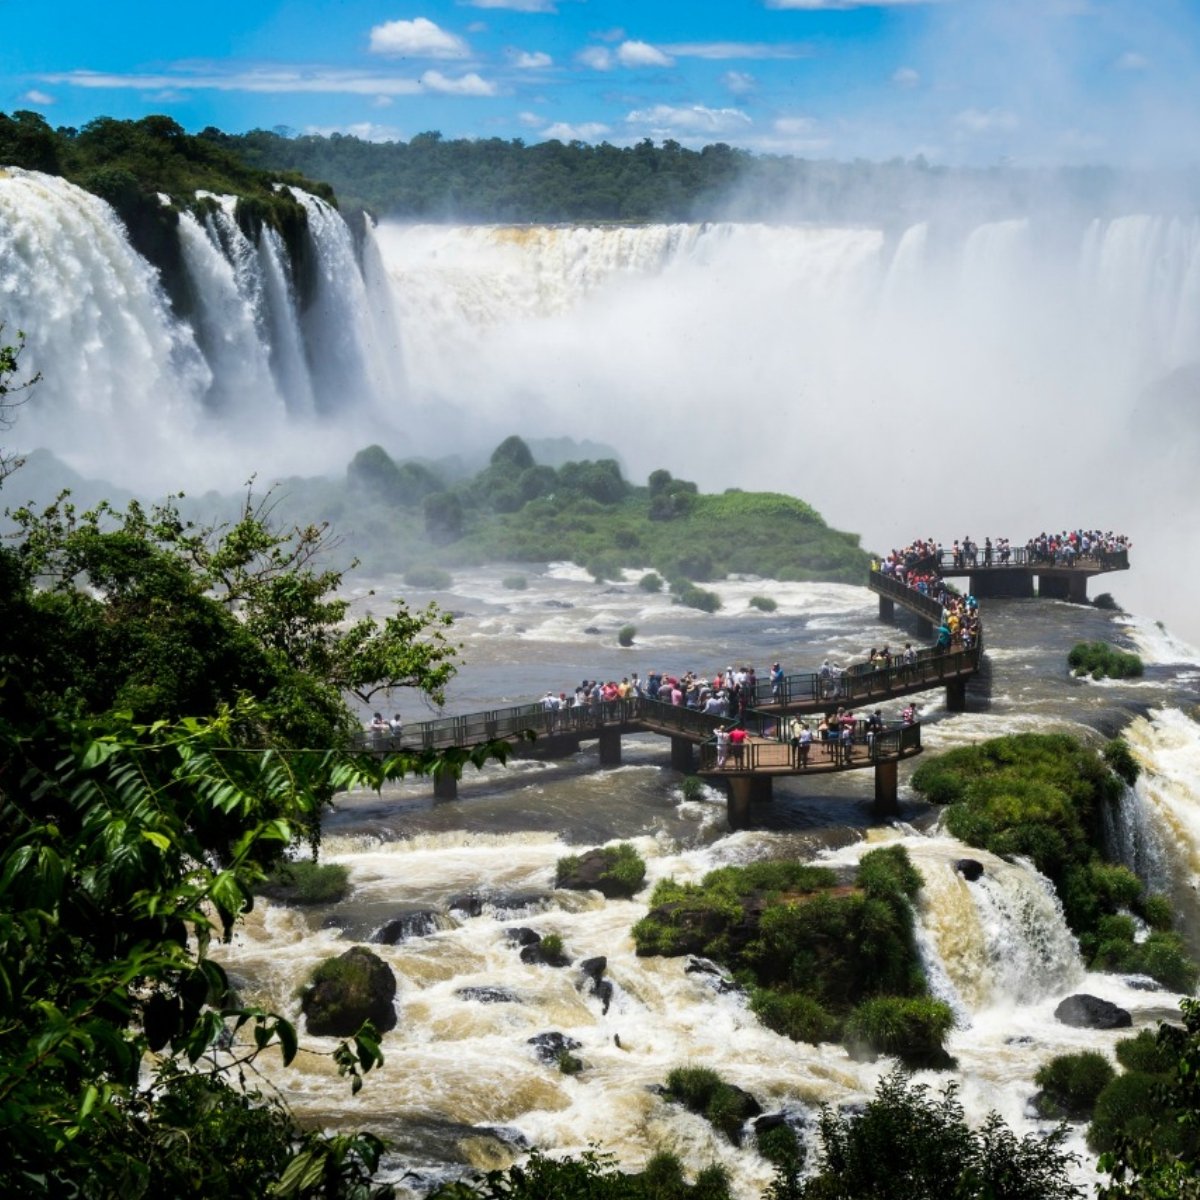 Комплекс водопадов на границе бразилии аргентины. Бразилия водопады Игуасу. Водопад Игуасу, Фос-Ду-Игуасу, Бразилия. Водопады Игуасу (Фос-Ду-Игуасу, Аргентина-Бразилия). Водопад Игуасу со стороны Бразилии.